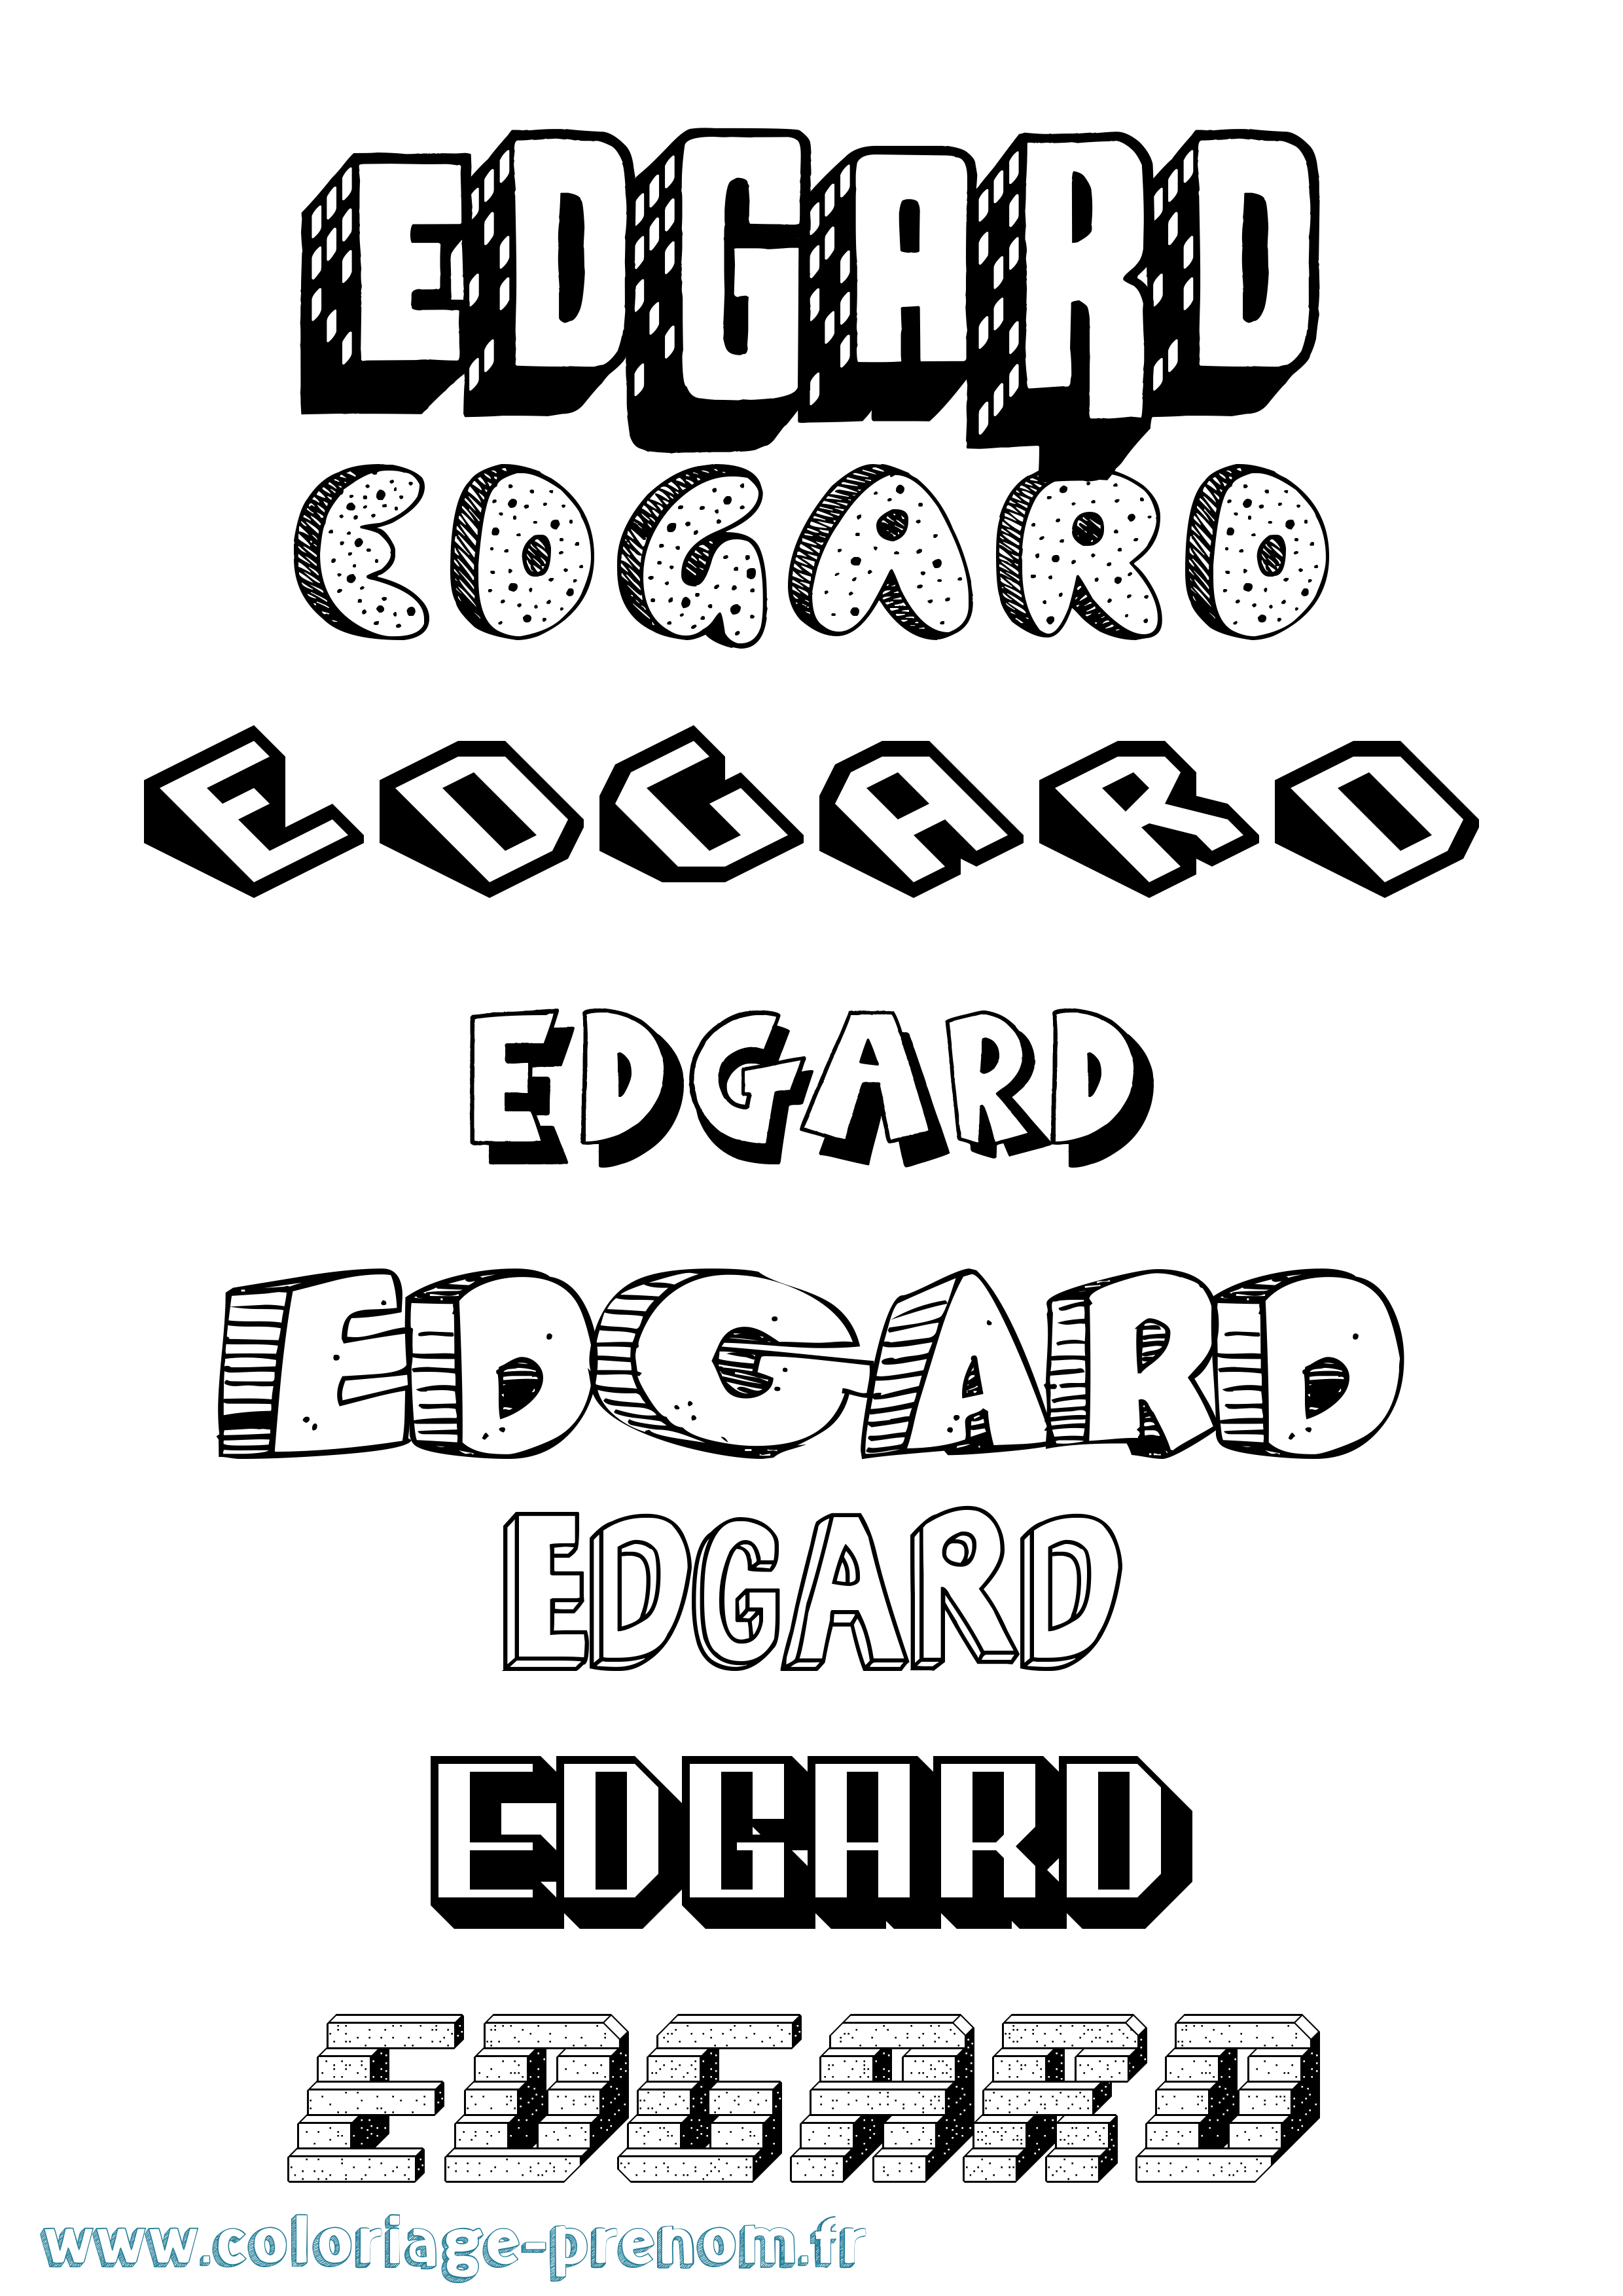 Coloriage prénom Edgard Effet 3D